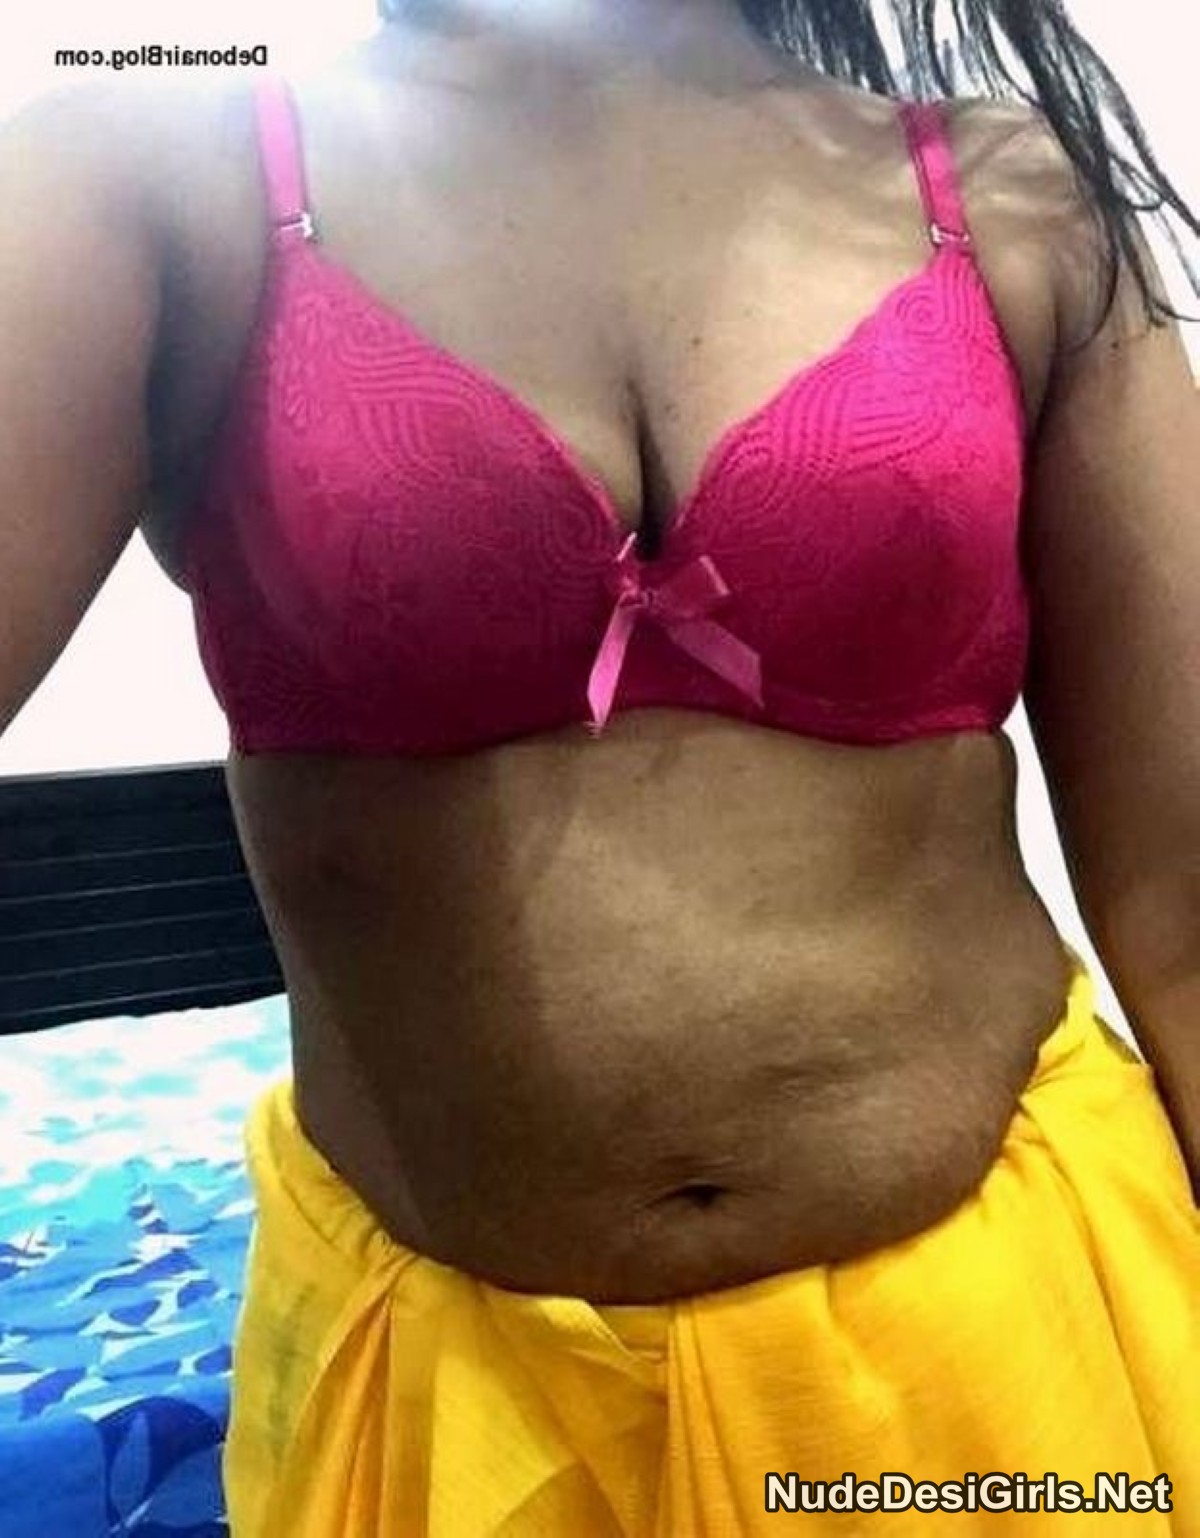 nangi indian aunty 1 - Big Boobs Indian Aunty Hot Photos Collections